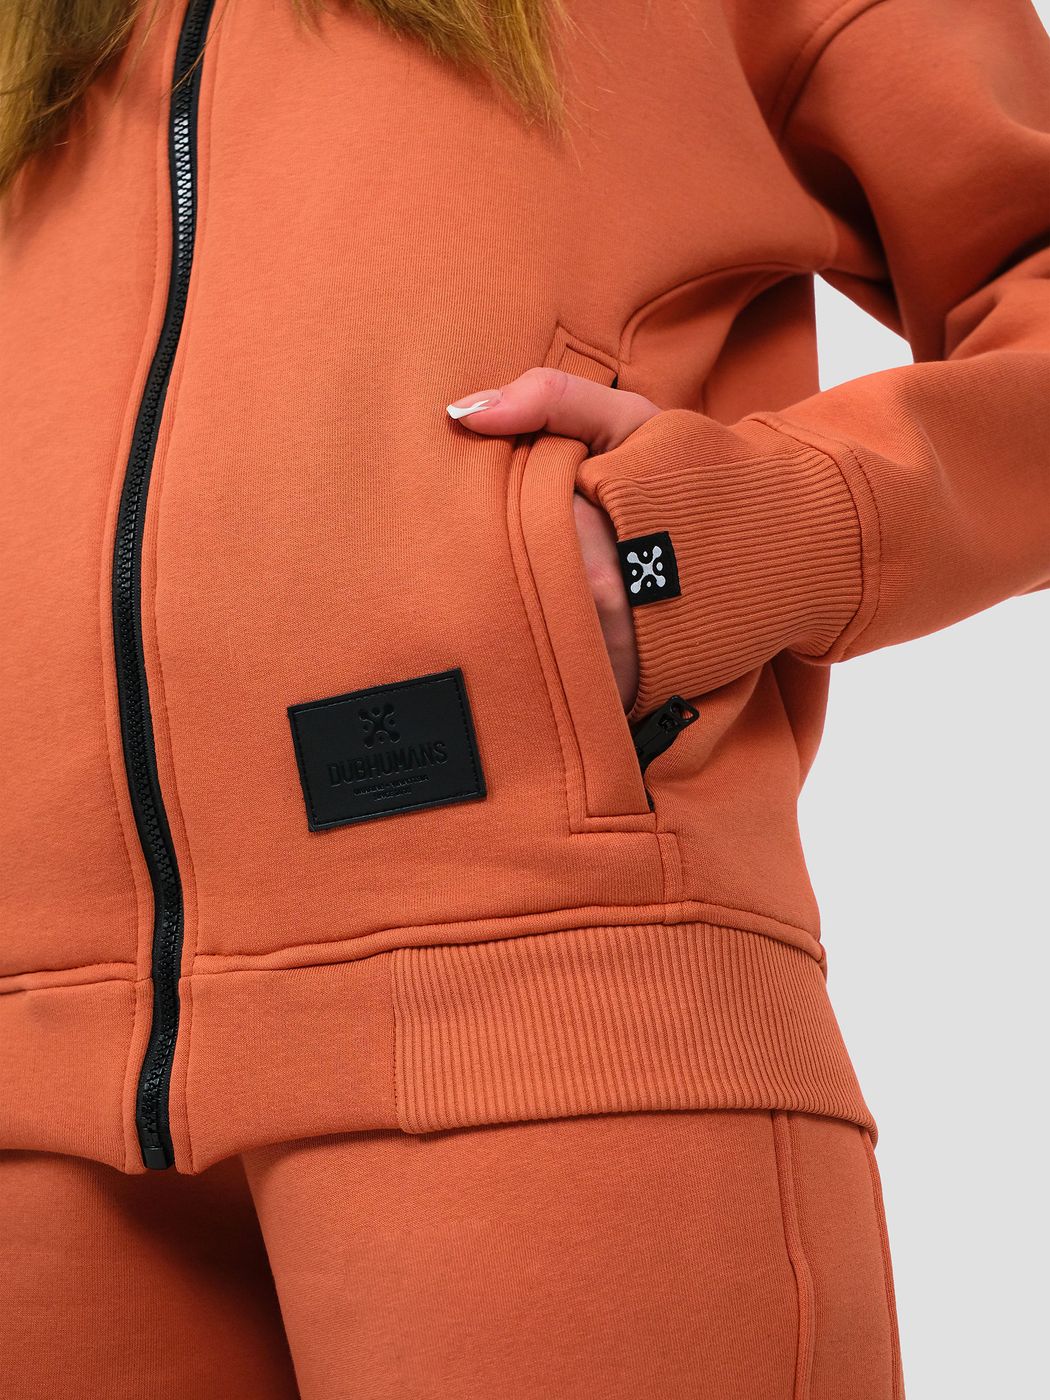 Women's tracksuit set Hoodie with a zipper and Pants Brick Orange, Brick orange, M-L, L (108 cm)